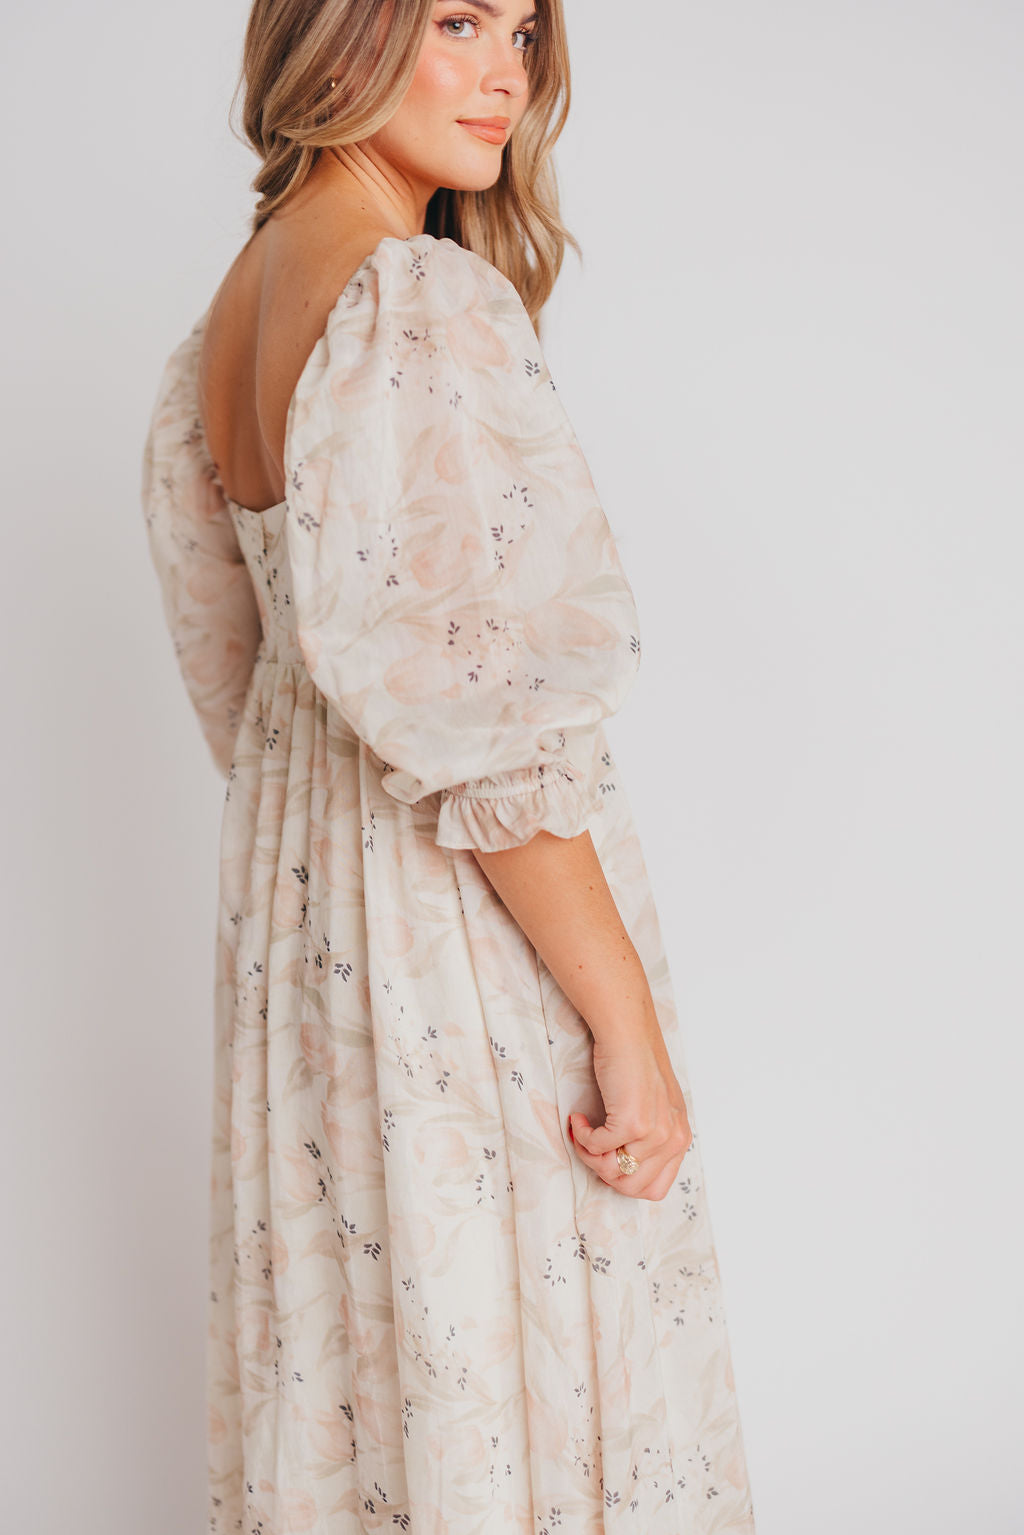 Mona Maxi Dress in Autumn Peach & Cream Floral - Bump Friendly Inclusive Sizing (S-3XL)